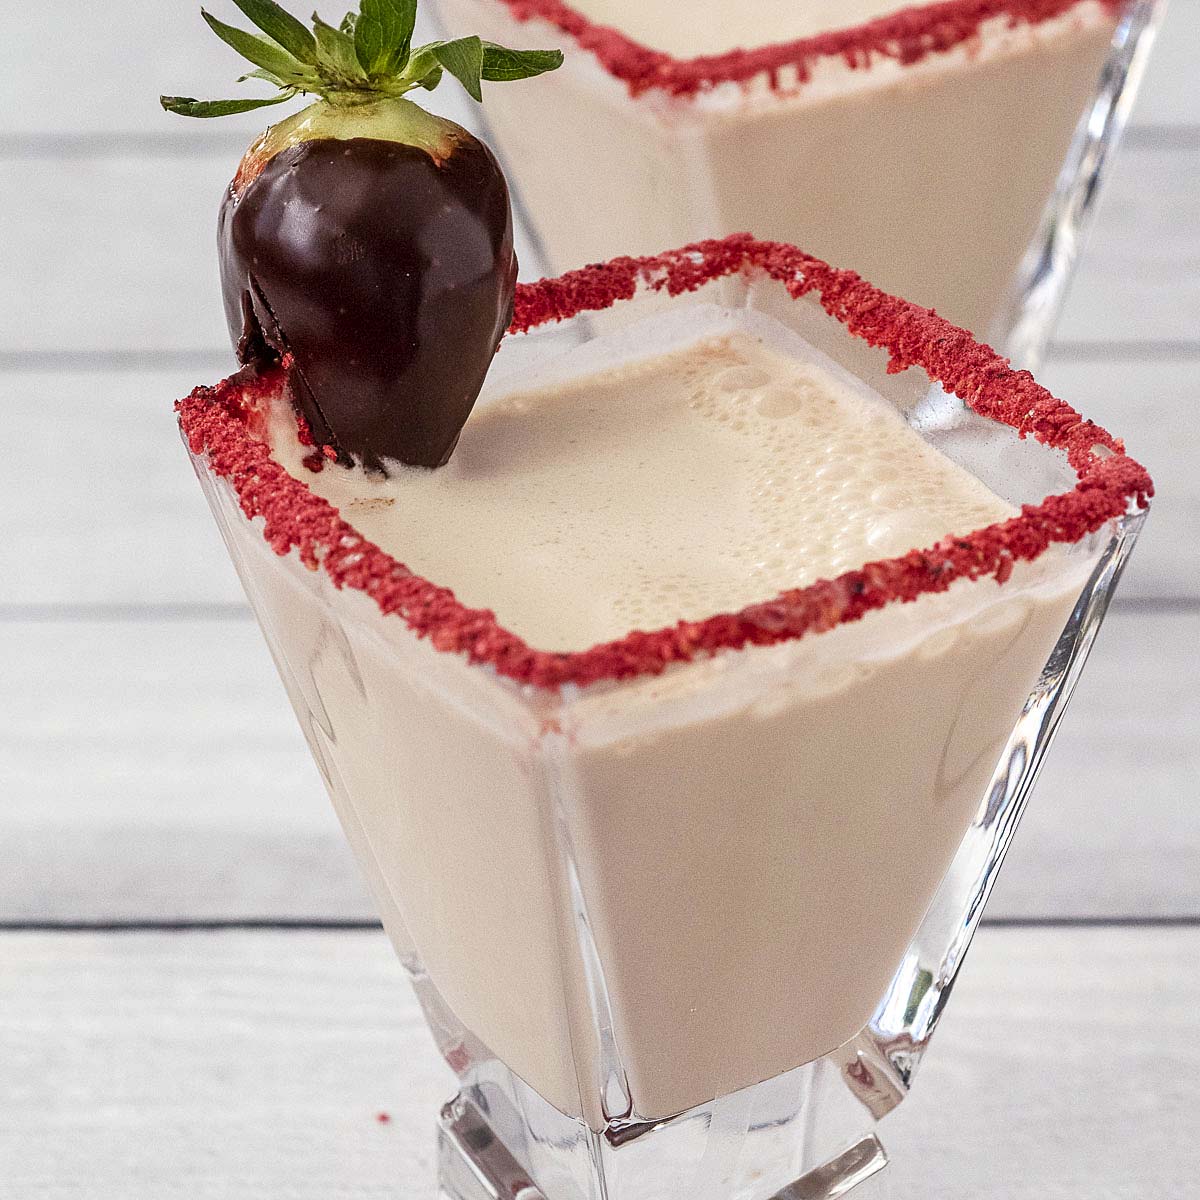 A chocolate-covered strawberry martini garnished with a chocolate-covered strawberry.